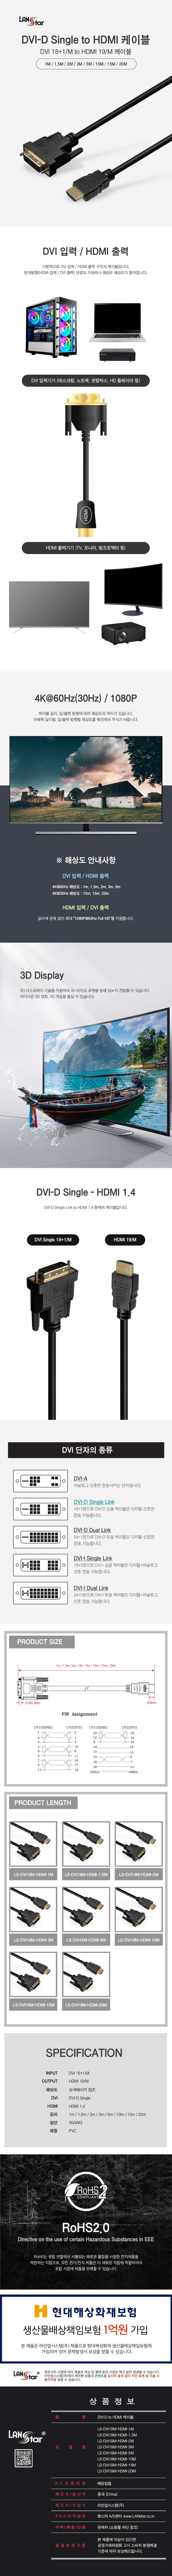 LS-DVI19M-HDMI.jpg